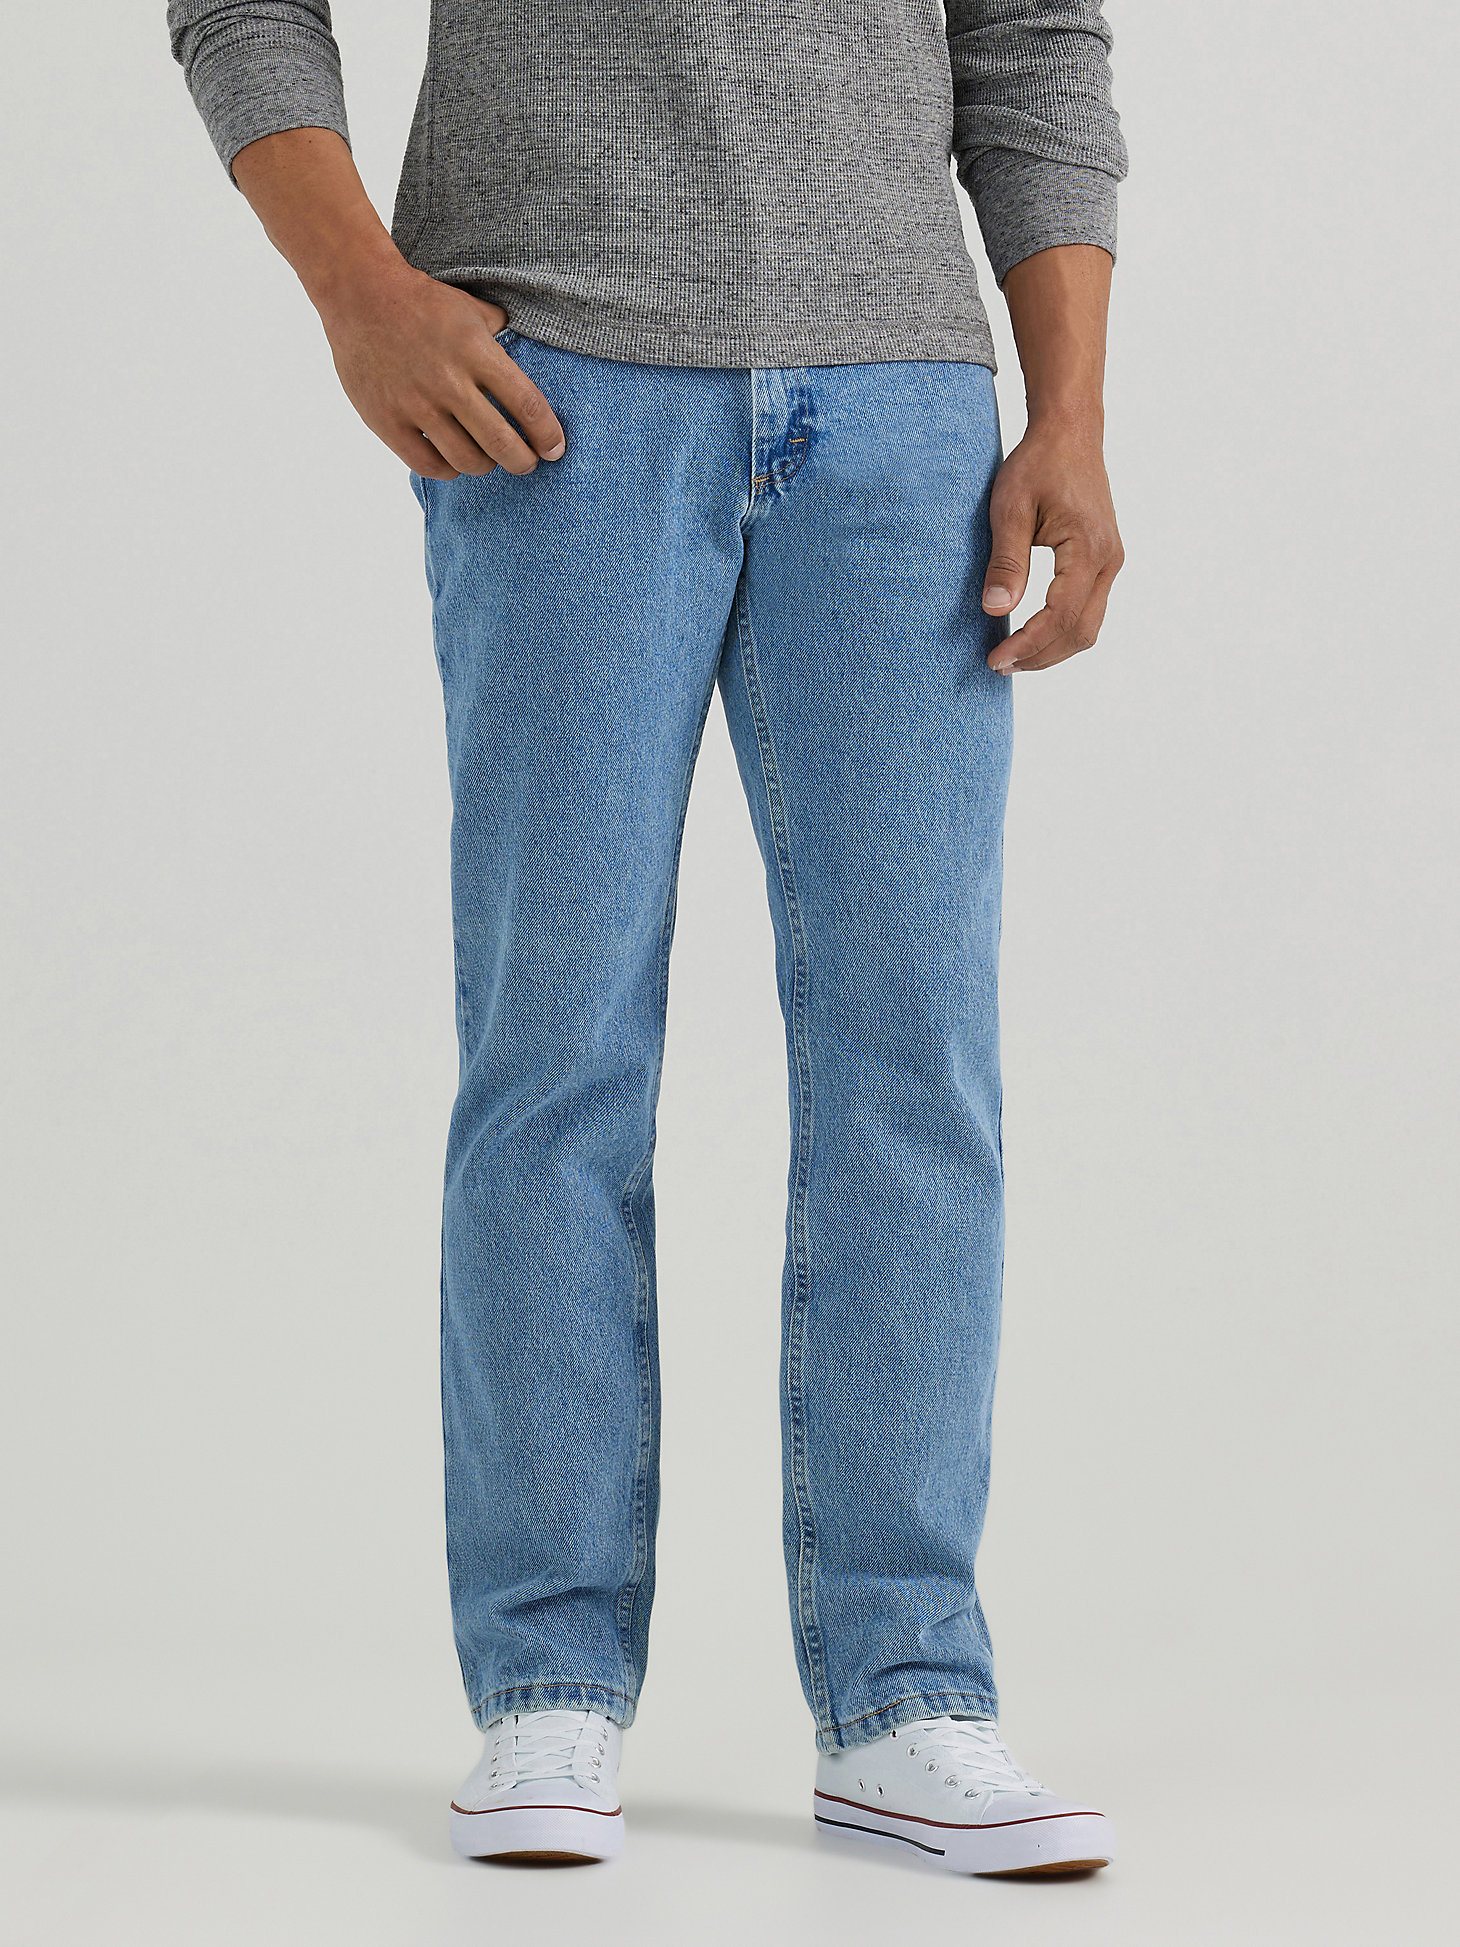 Men's Wrangler Authentics® Regular Fit Cotton Jean in Light Stonewash main view